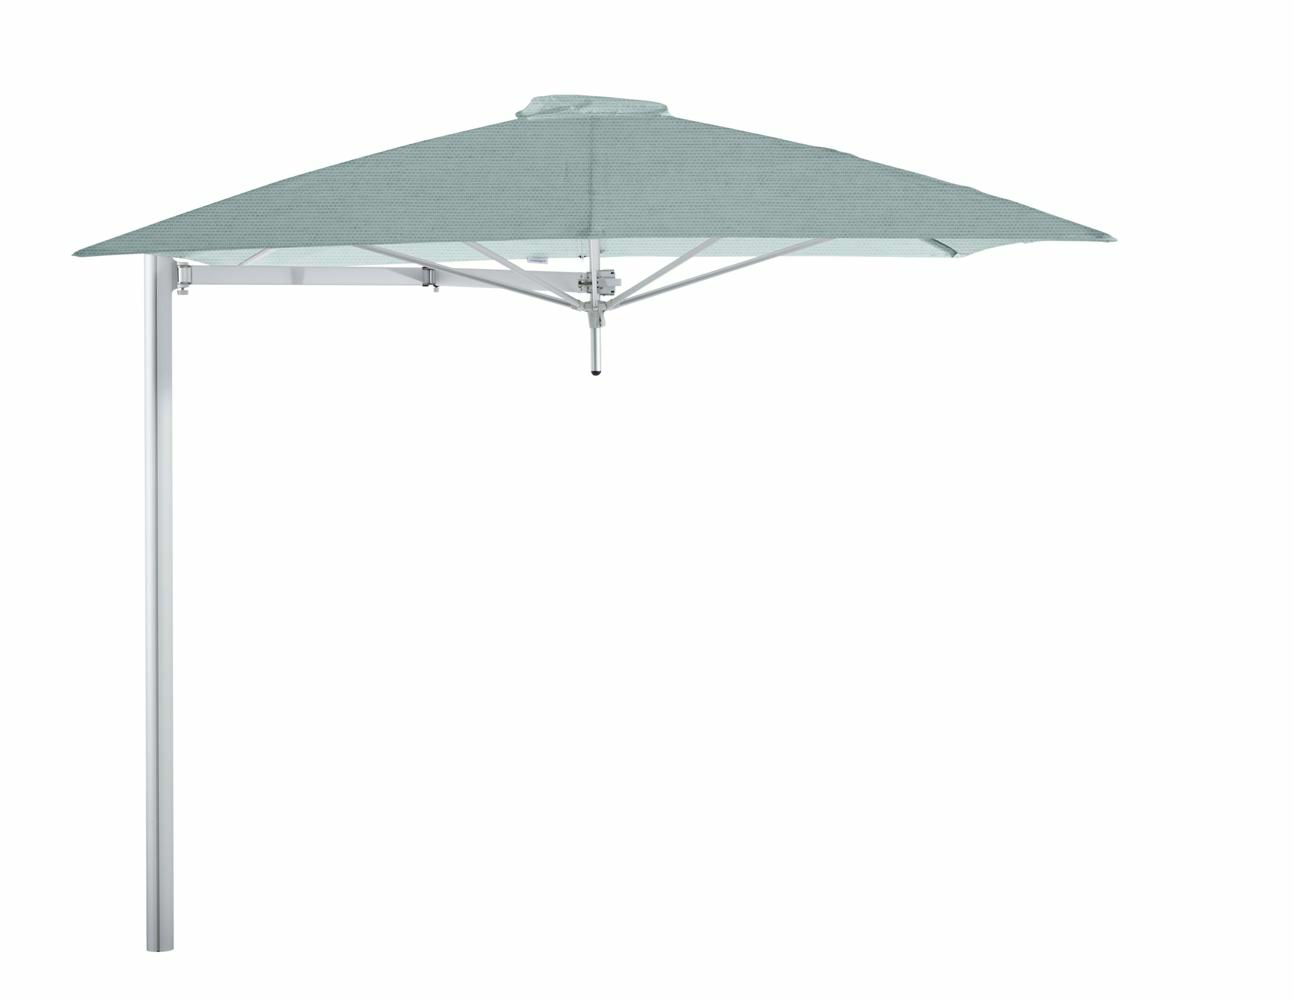 Paraflex cantilever umbrella square 2,3 m with Curacao fabric and a Neo arm